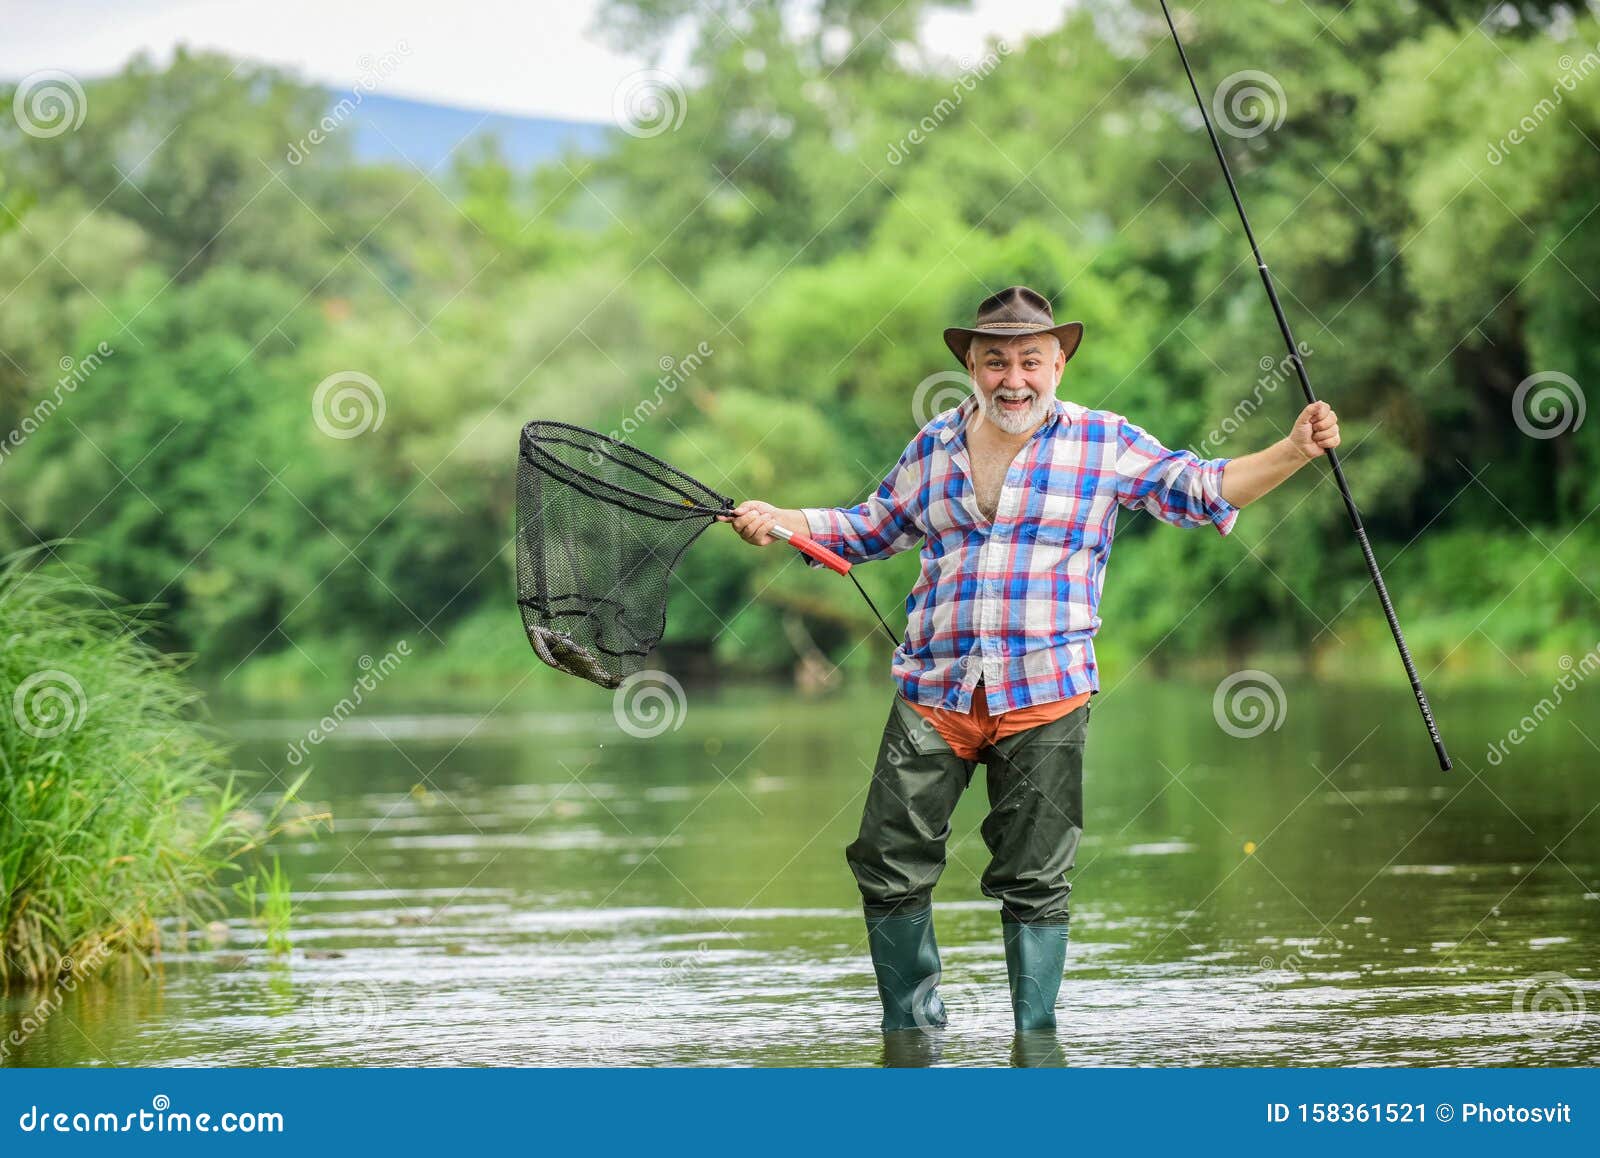 https://thumbs.dreamstime.com/z/fisherman-fishing-rod-activity-hobby-fishing-freshwater-lake-pond-river-happiness-rod-your-hand-fisherman-158361521.jpg